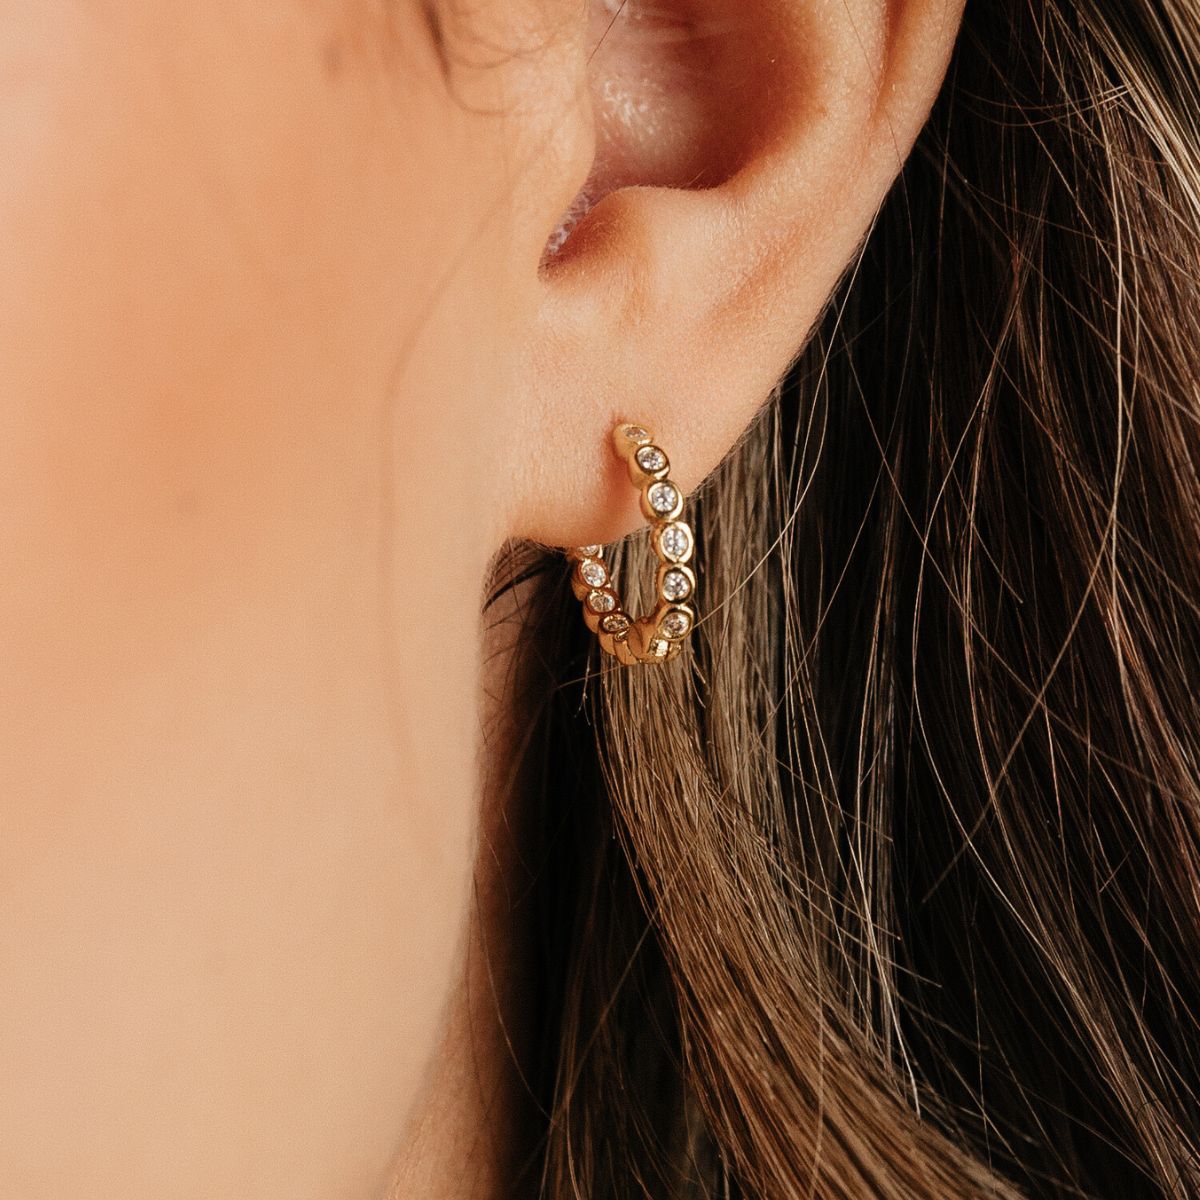 14k Yellow Gold 6 Prong Round CZ Stud Earrings | Jewelryland.com